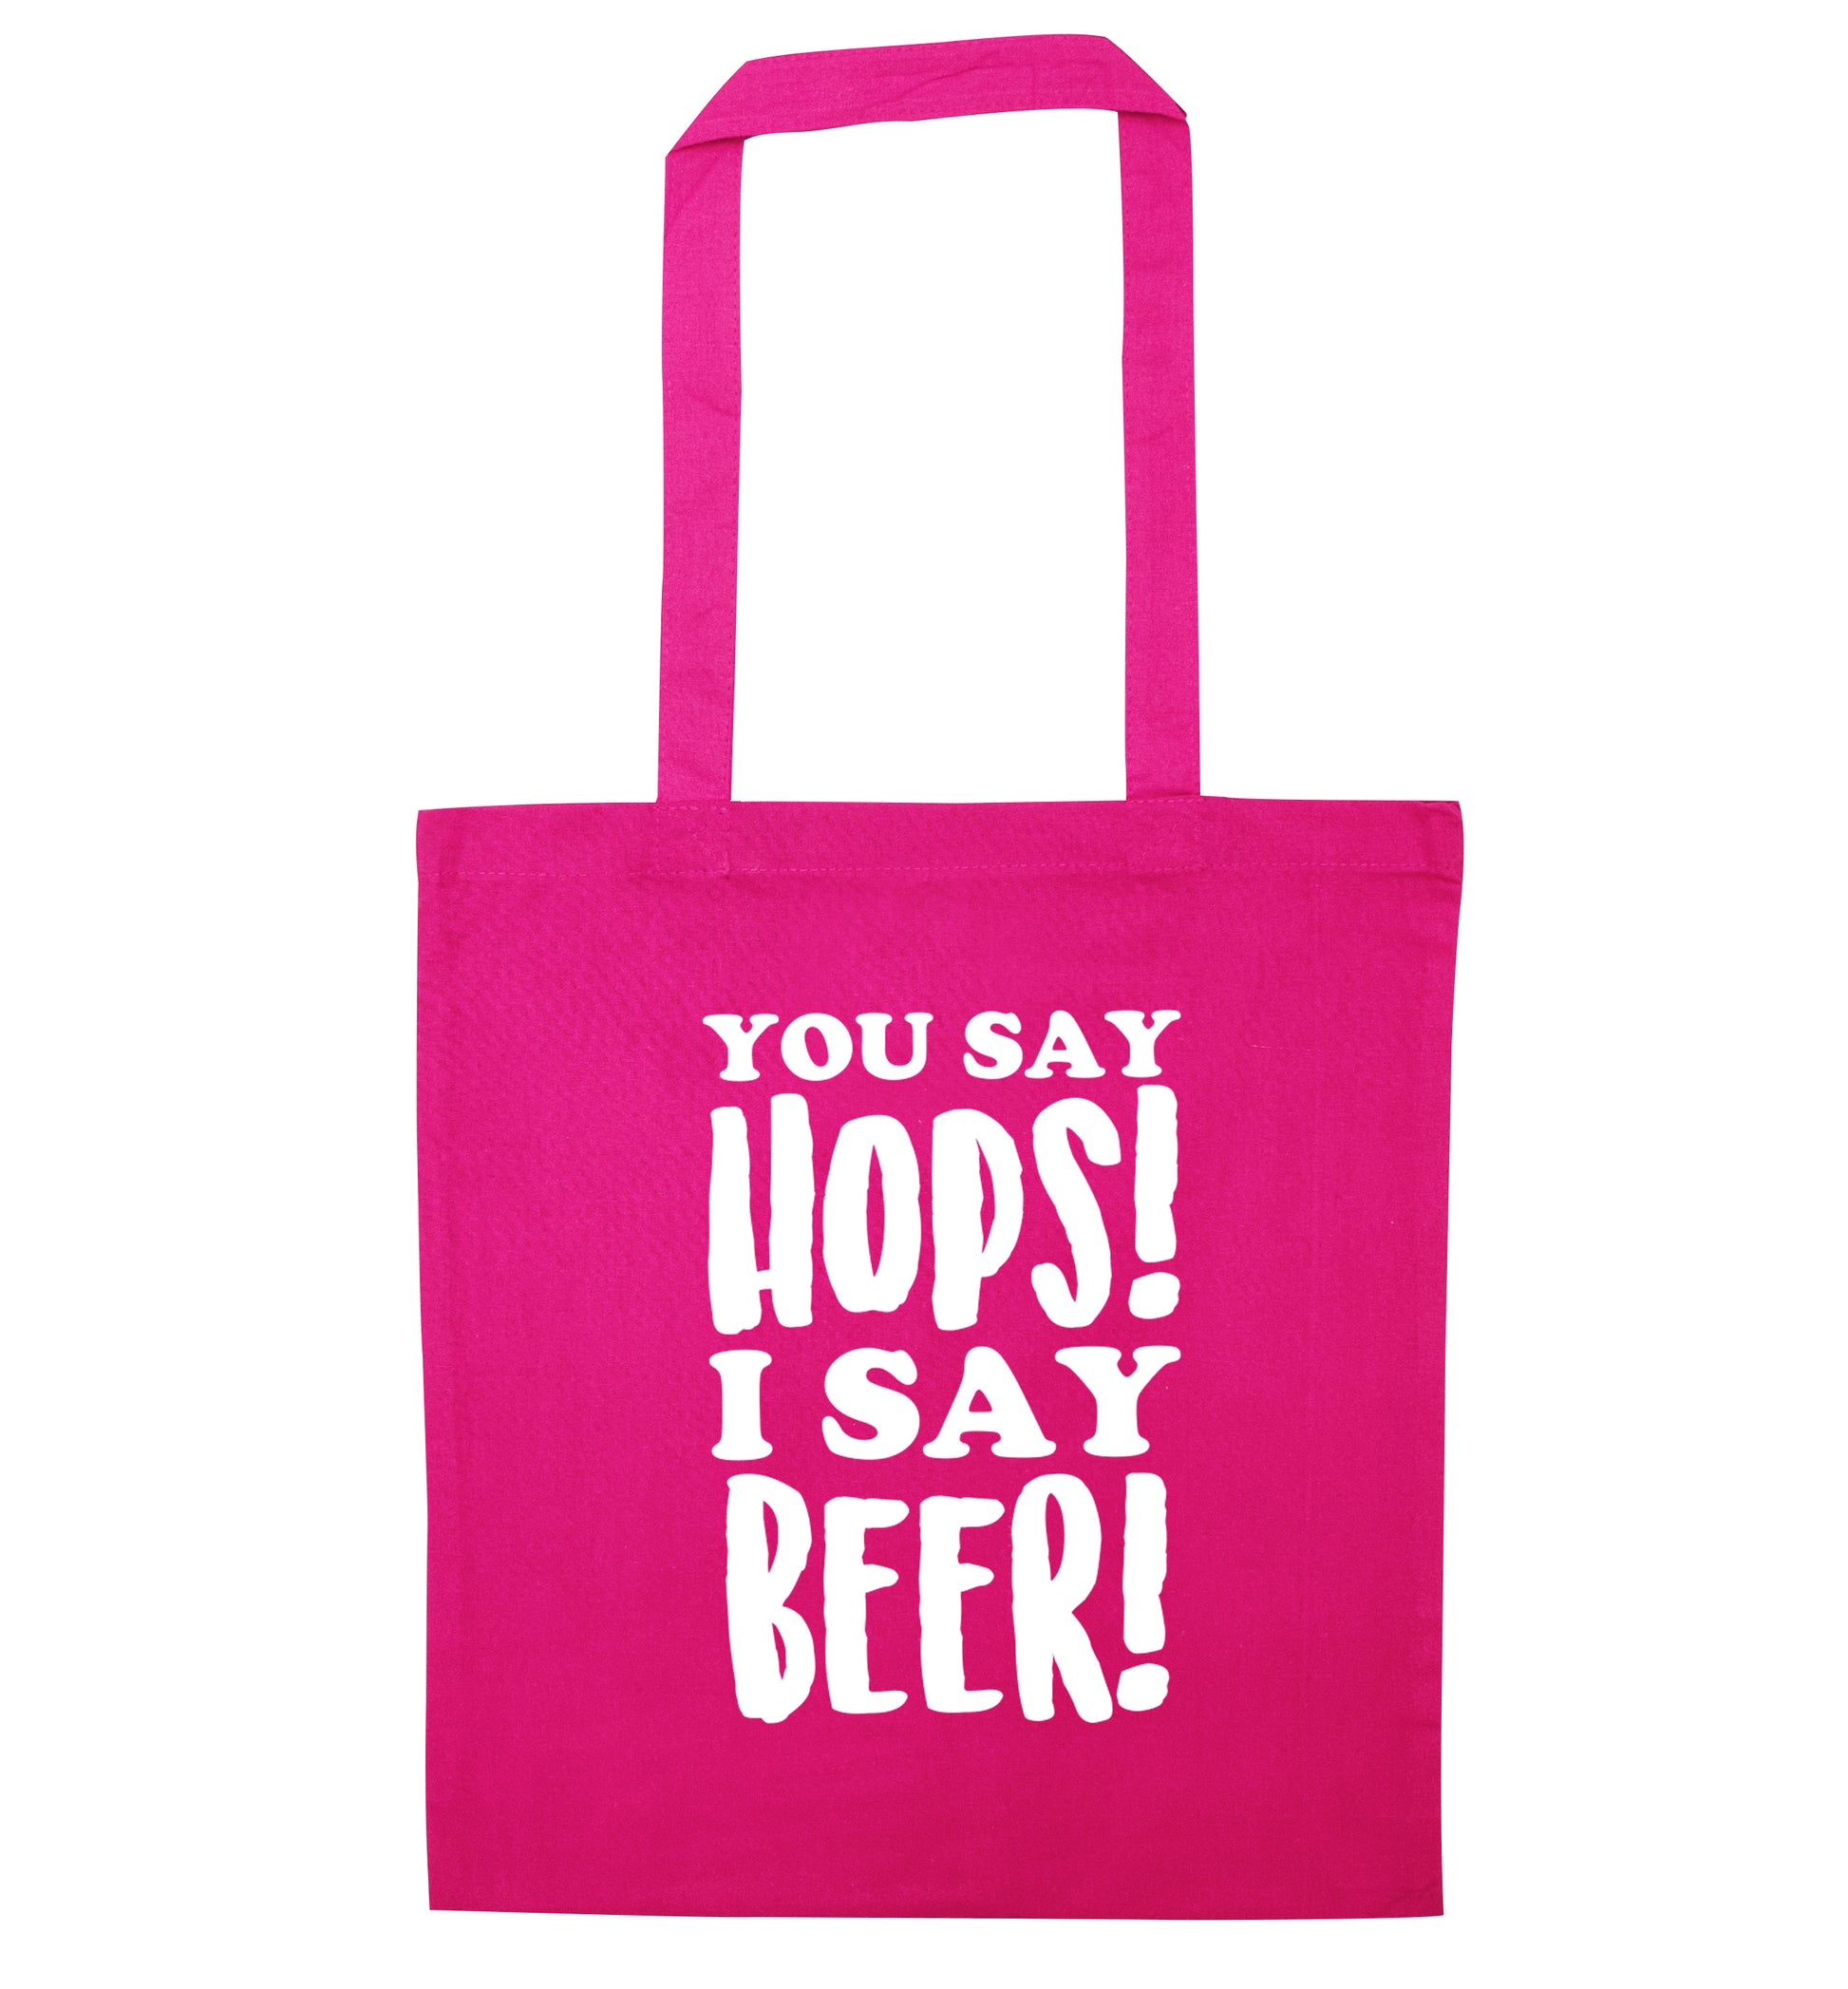 You say hops I say beer! pink tote bag